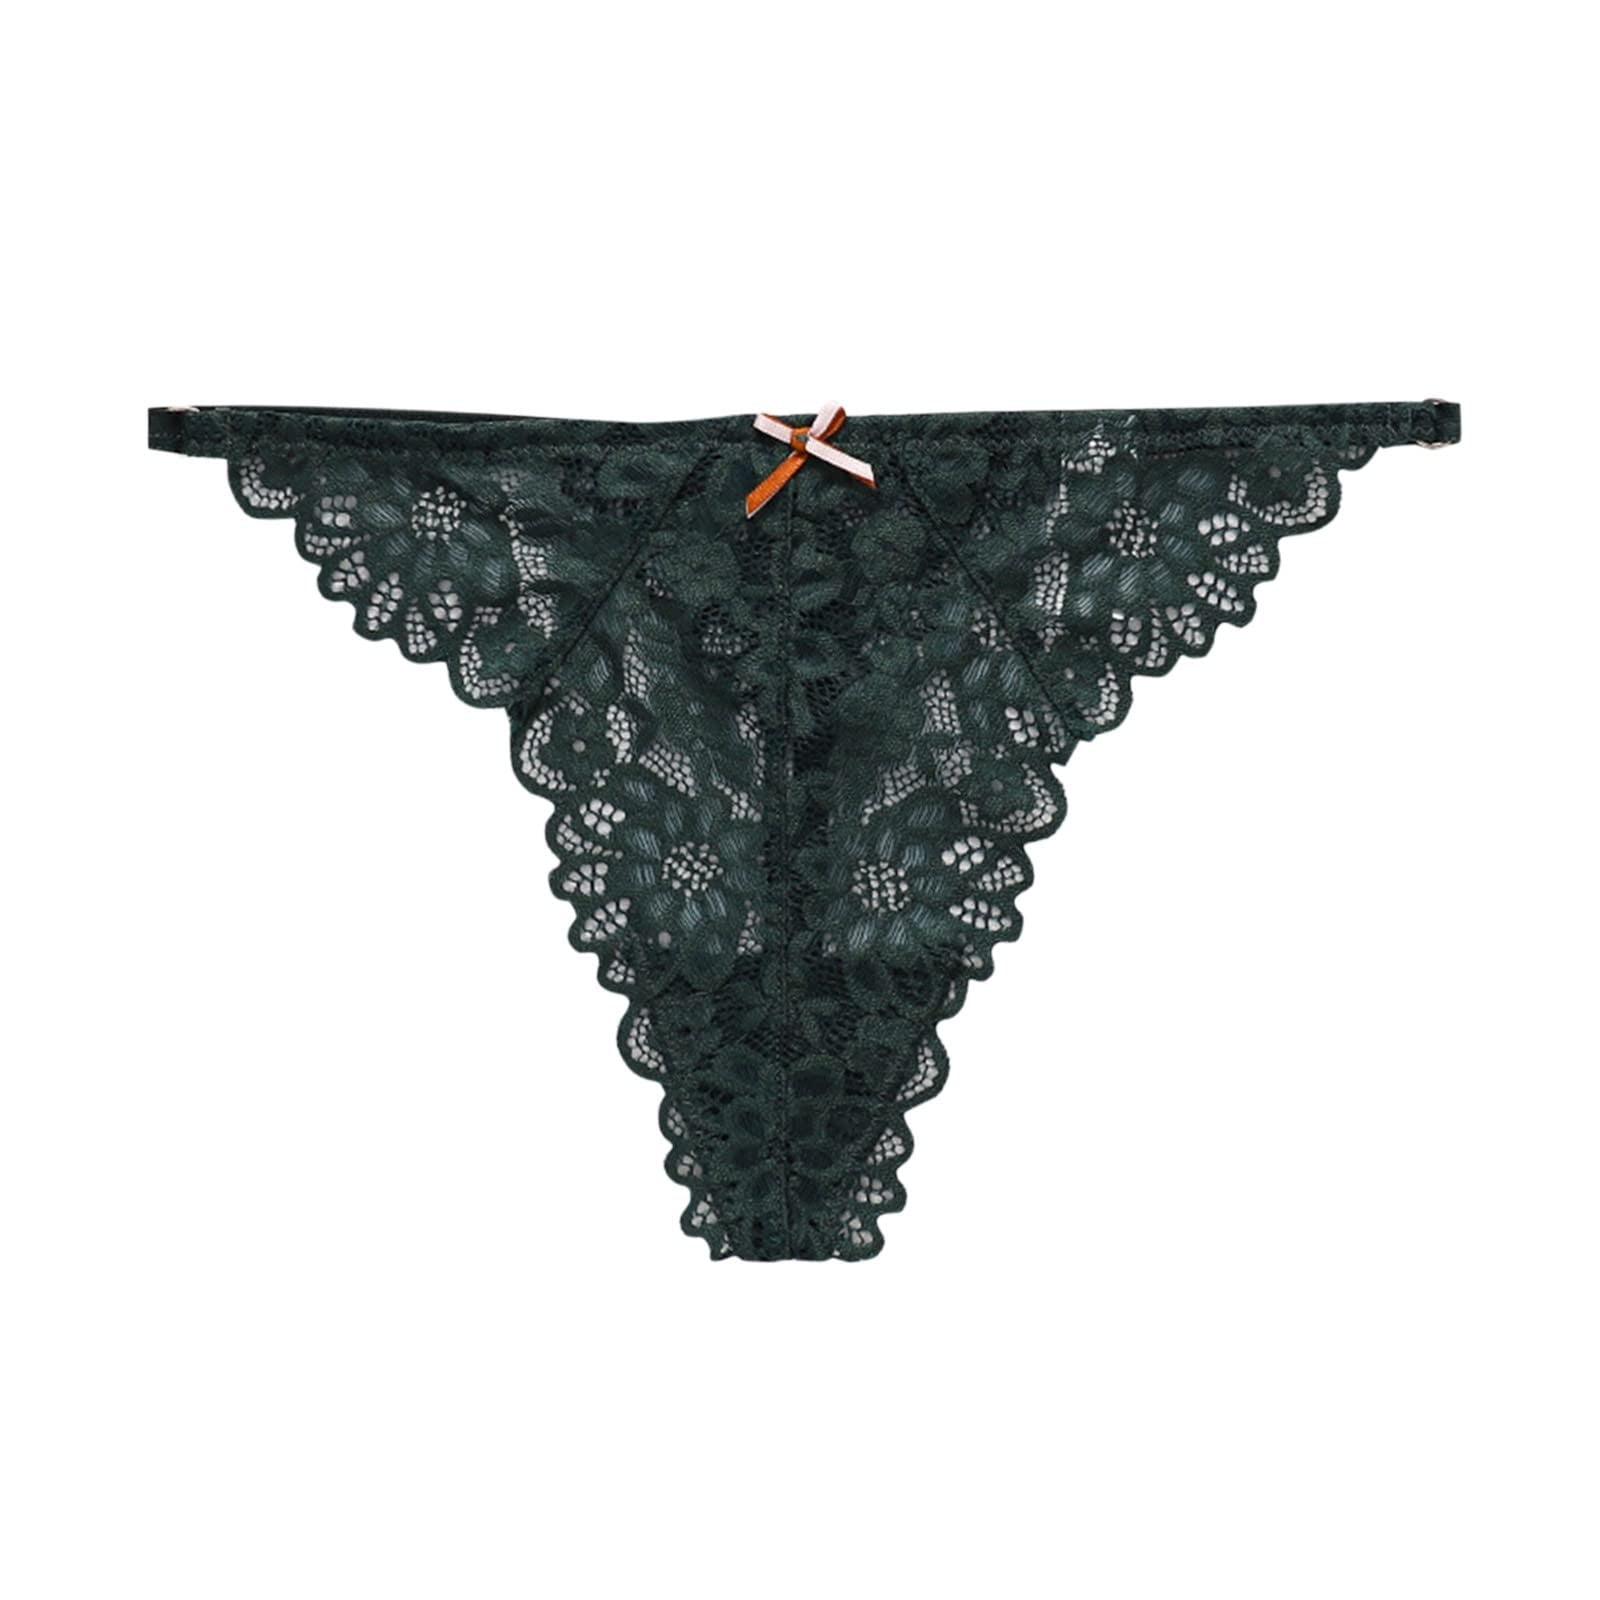 HUPOM Control Top Pantyhose For Women Underwear Briefs Leisure Tie Seamless  Waistband Black XL